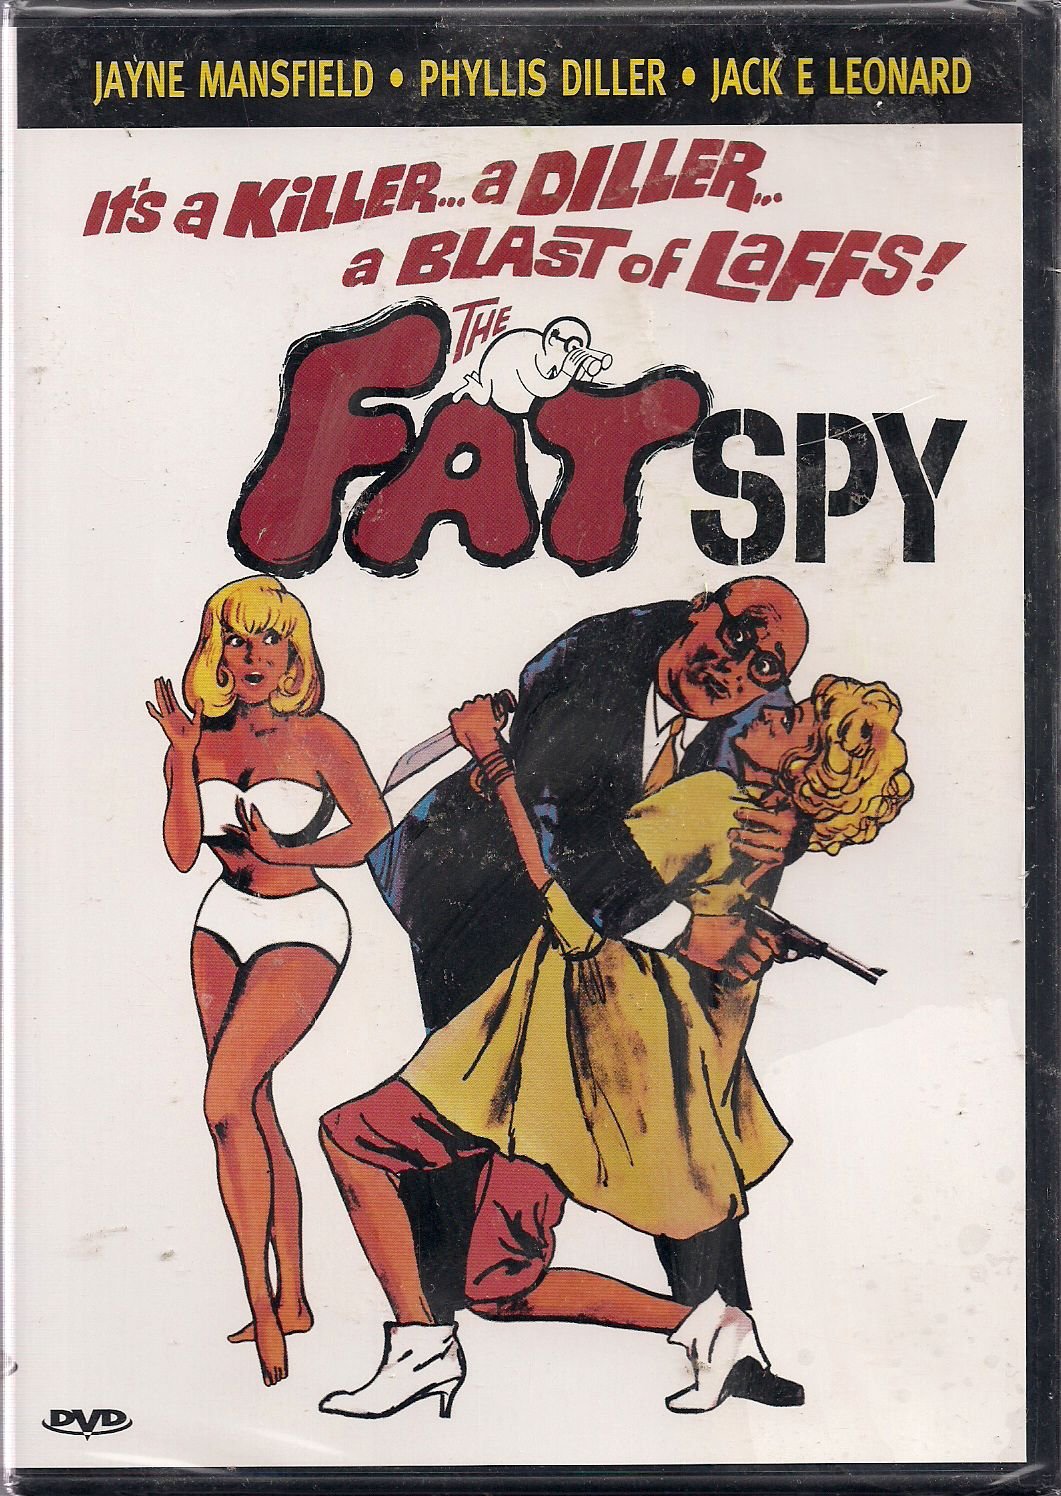 The Fat Spy on MovieShack